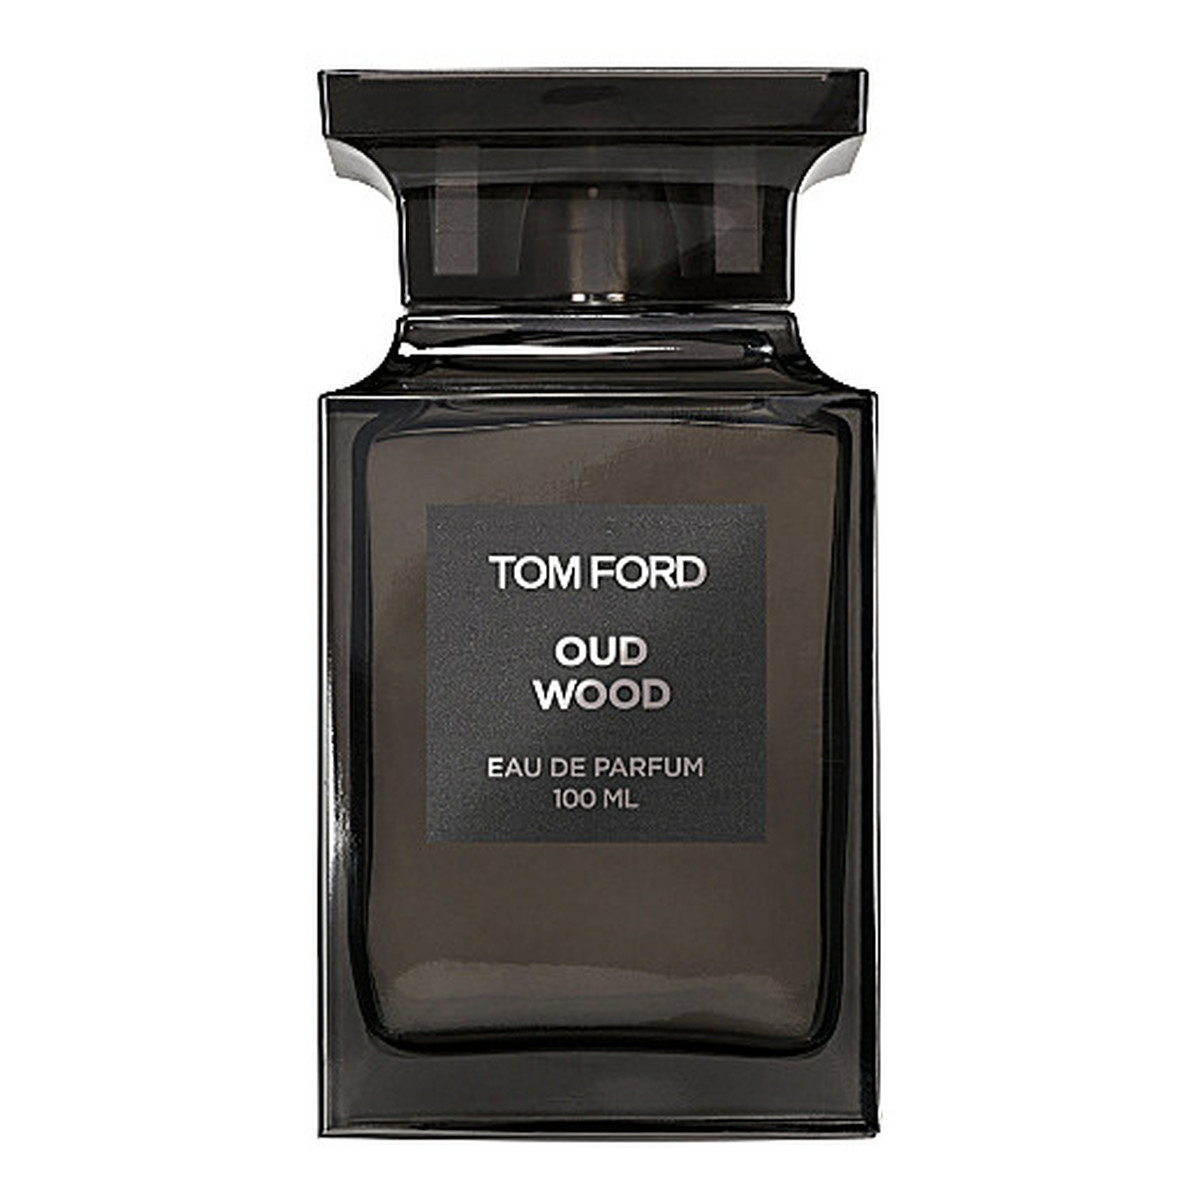 Tom Ford Oud Wood EDP spray 100ml